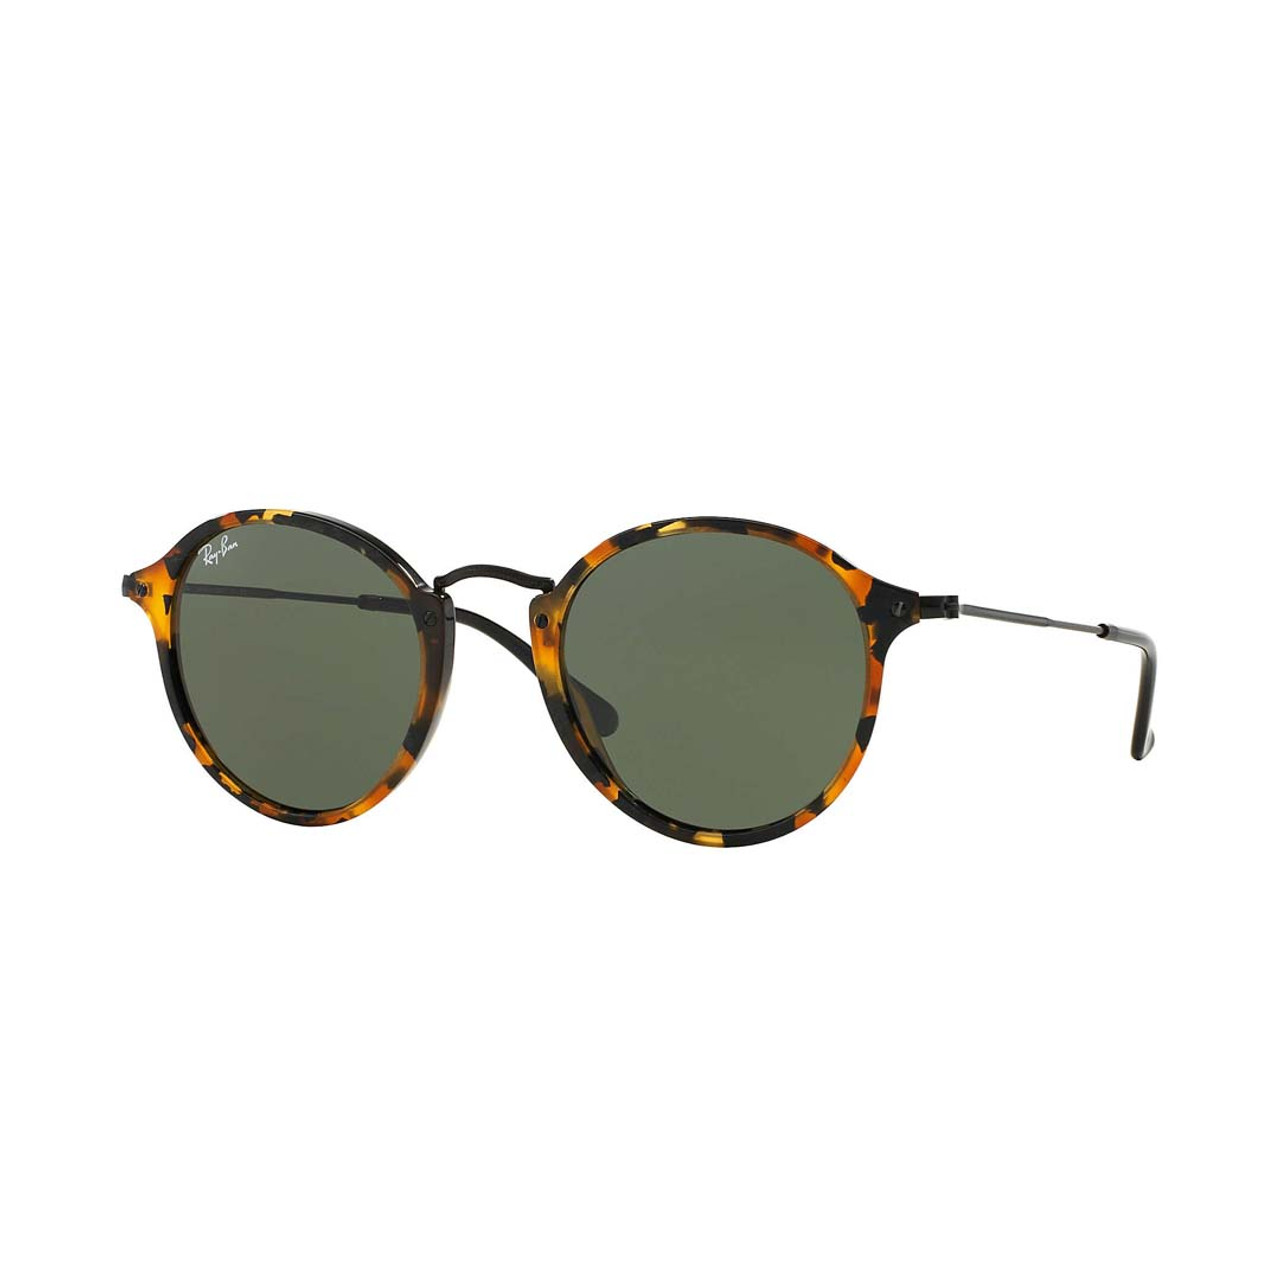 Buy Monsoon Tortoiseshell Square Brown Sunglasses from the Next UK online  shop